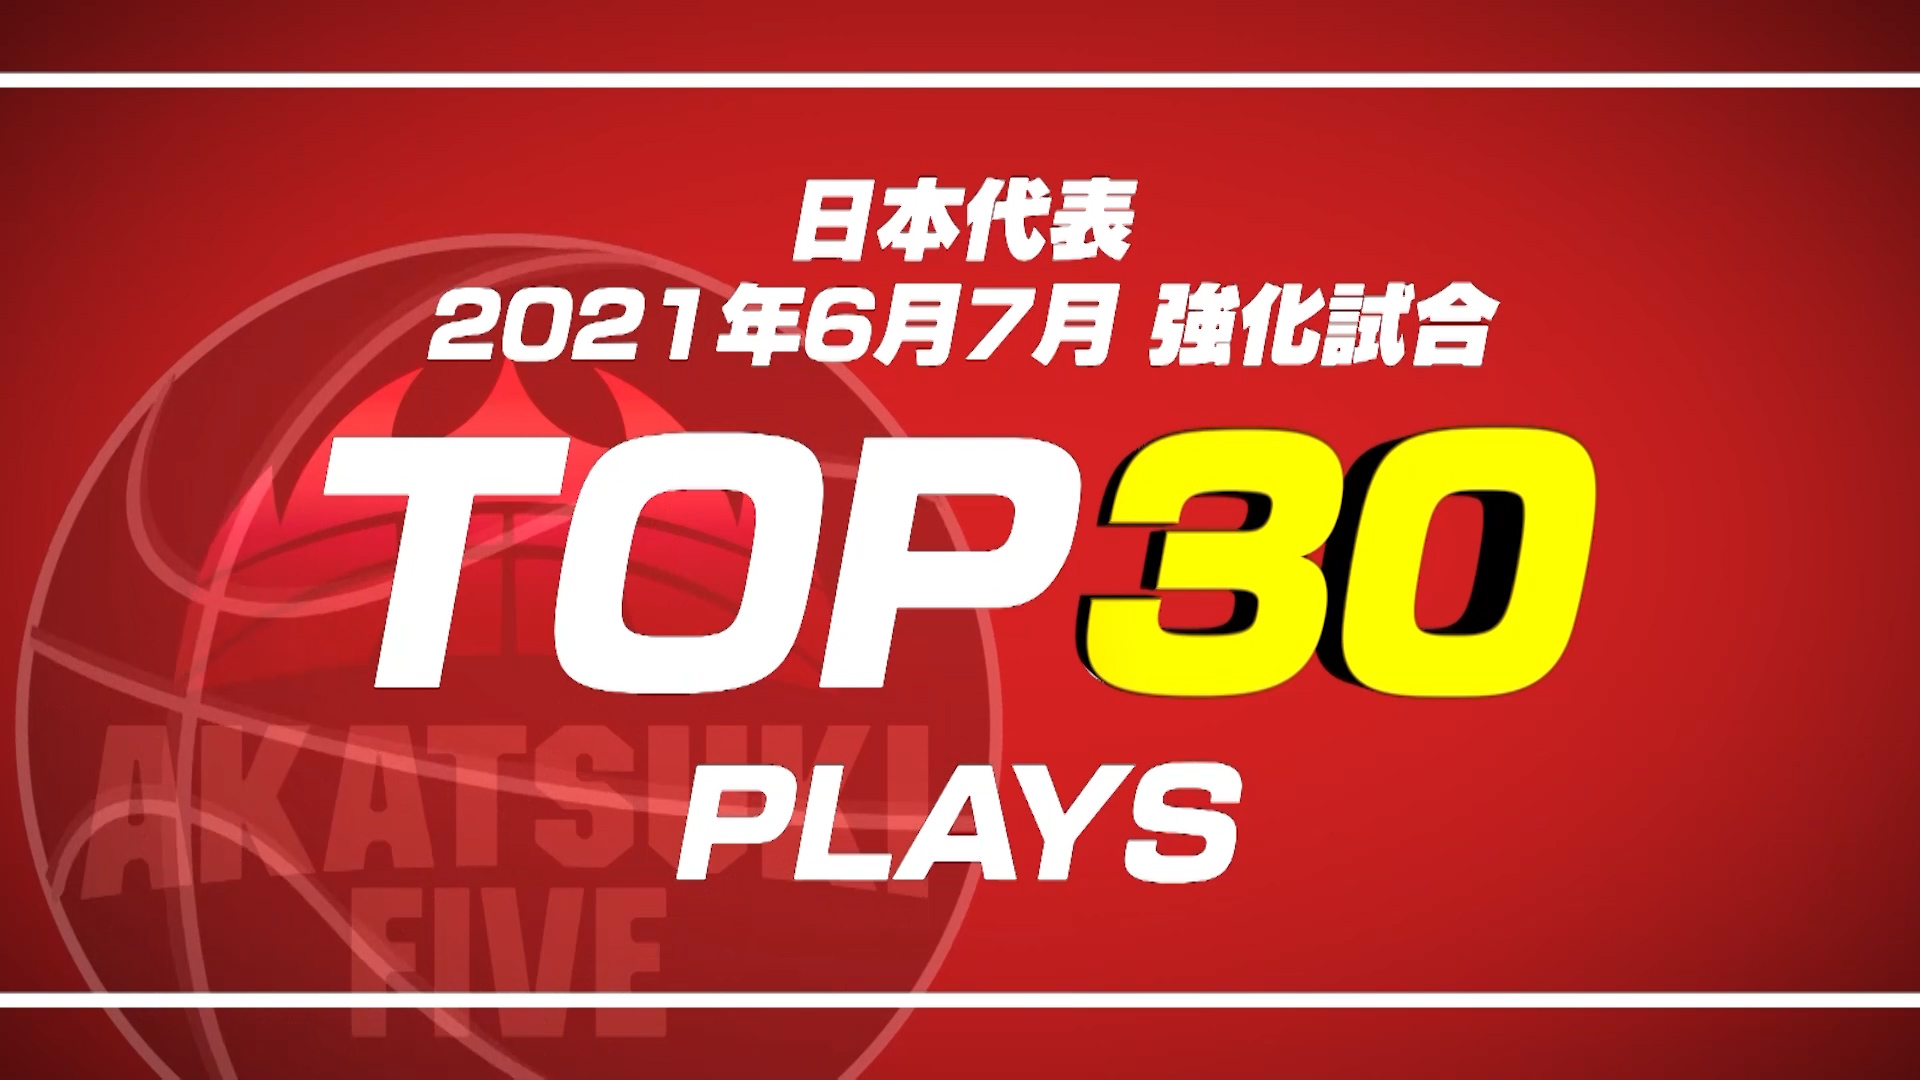 【TOP PERFORMANCE】日本代表強化試合 TOP30 PLAYS